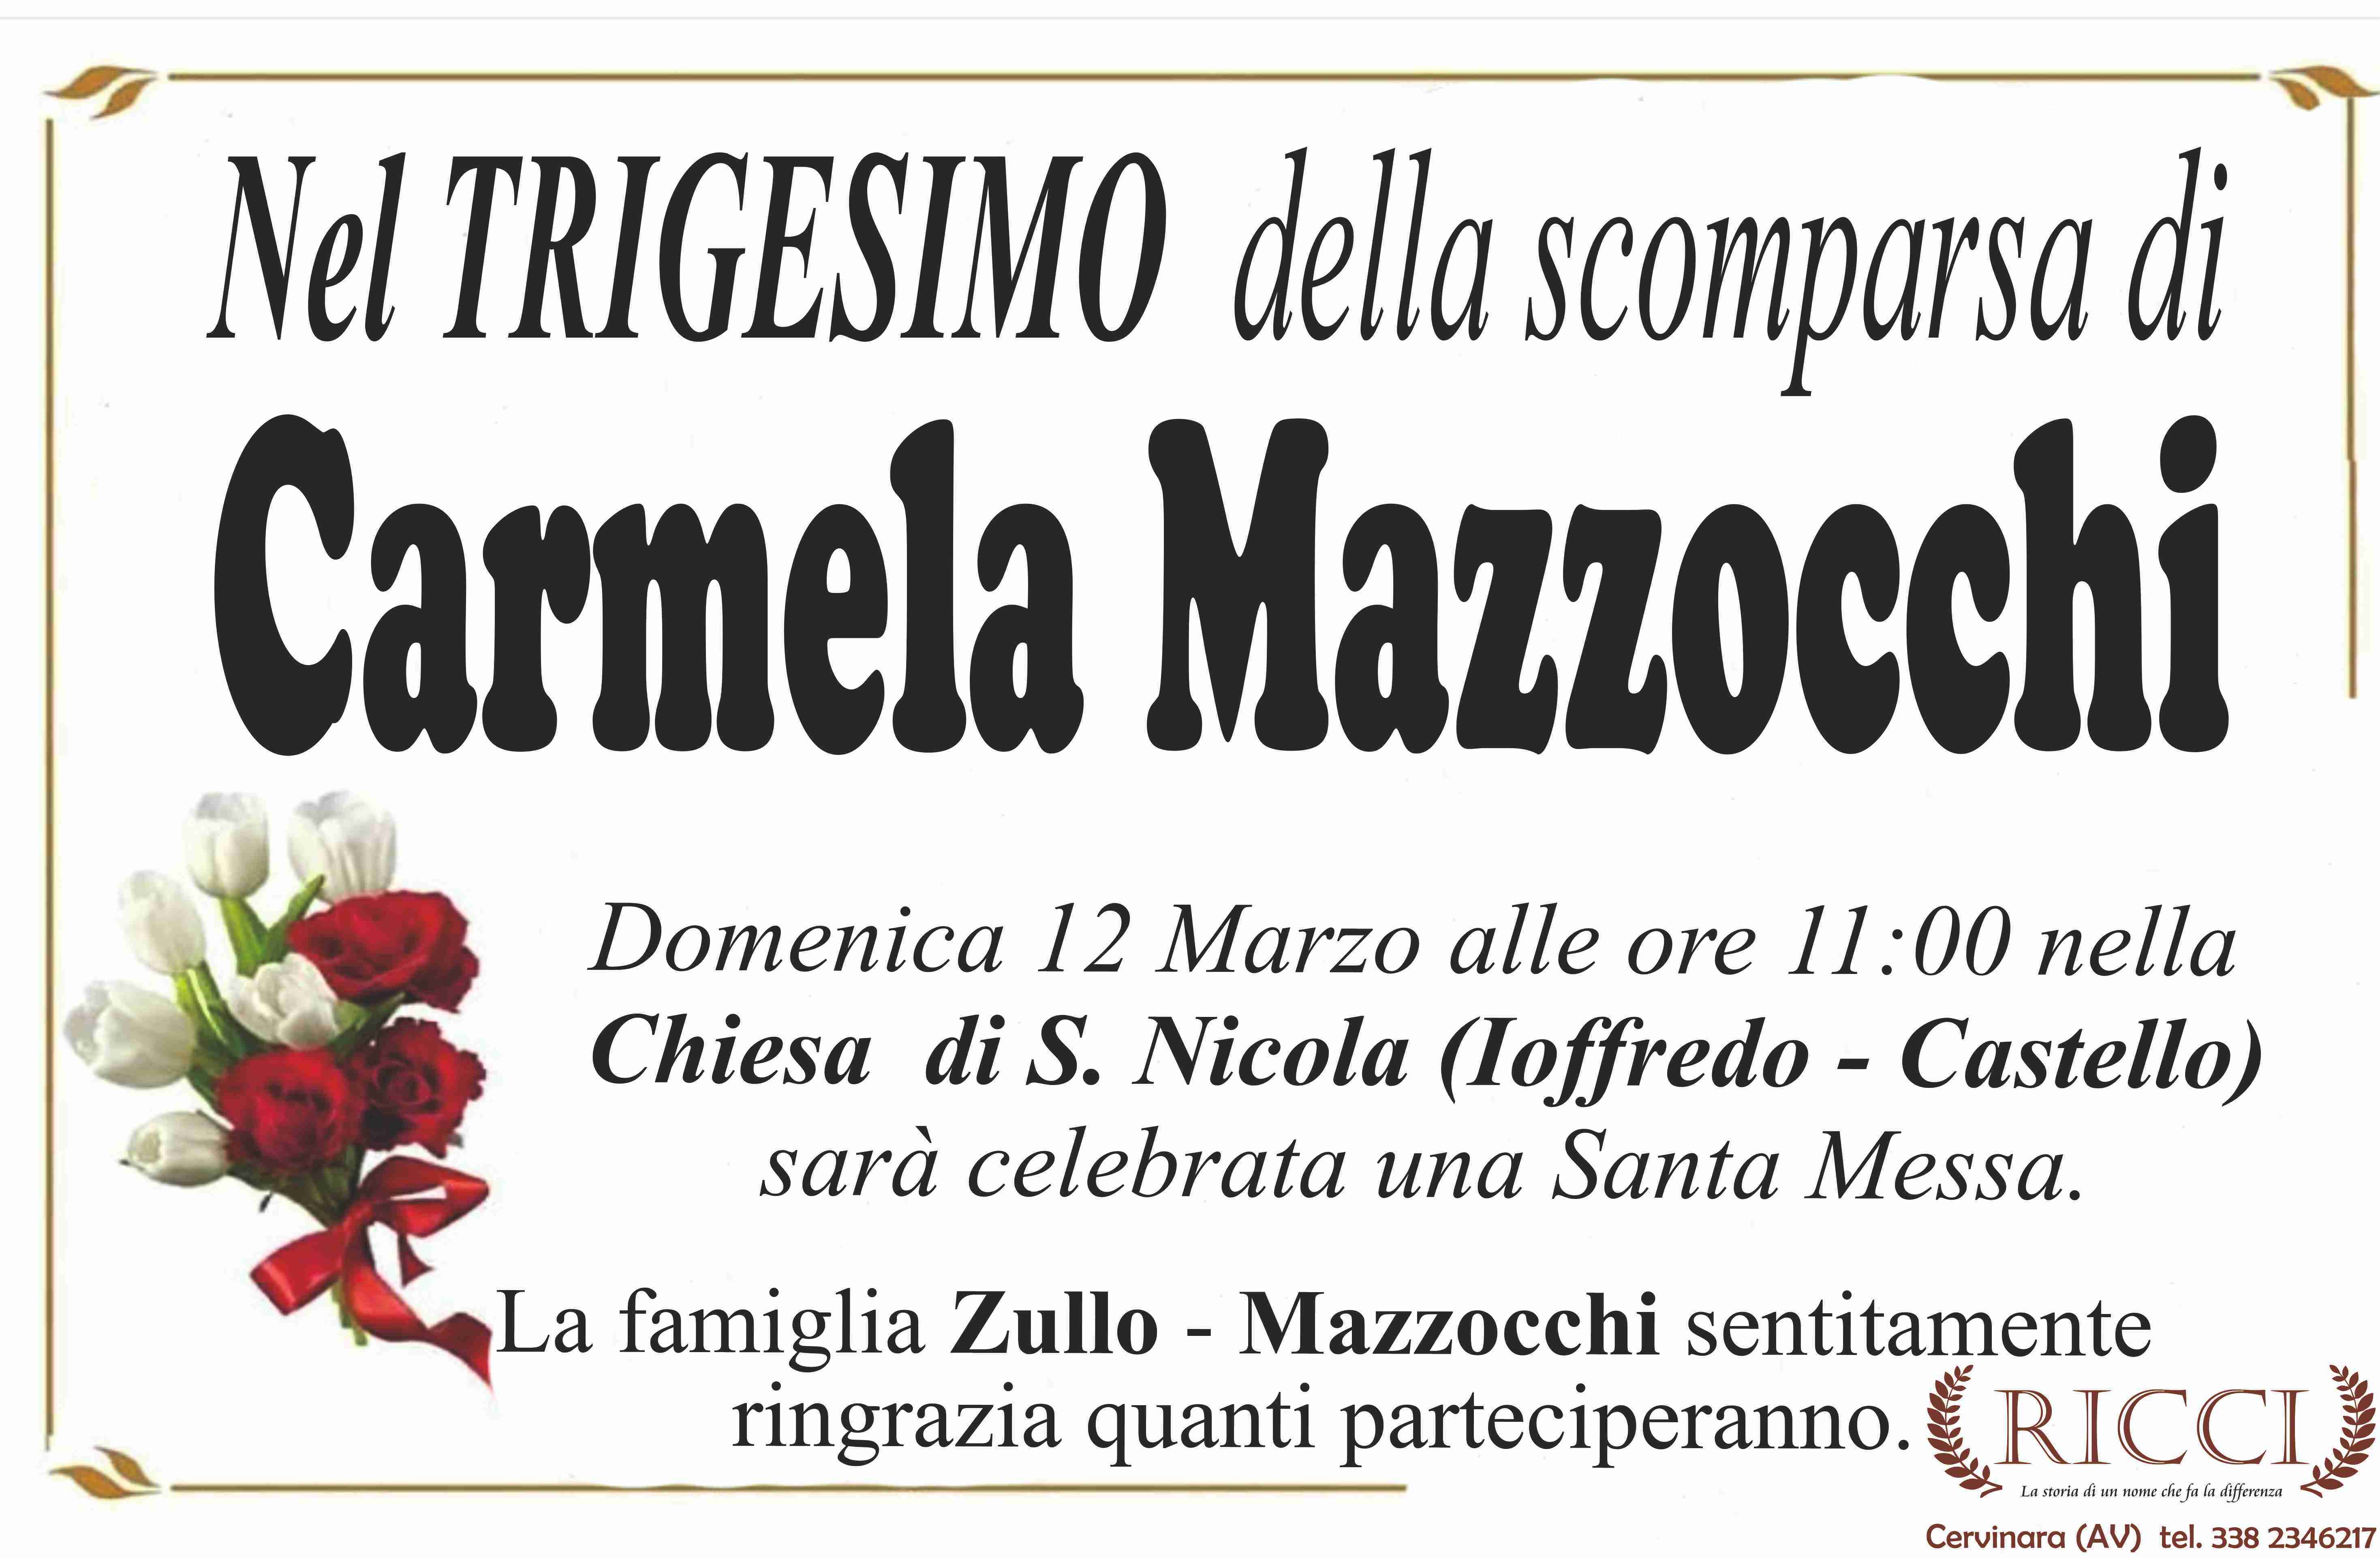 Carmela Mazzocchi